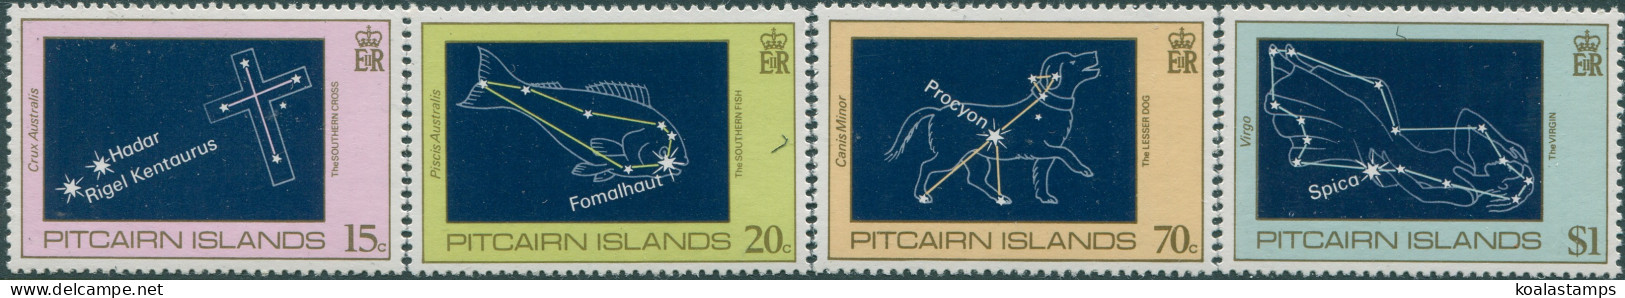 Pitcairn Islands 1984 SG259-262 Night Sky Set MNH - Pitcairn Islands